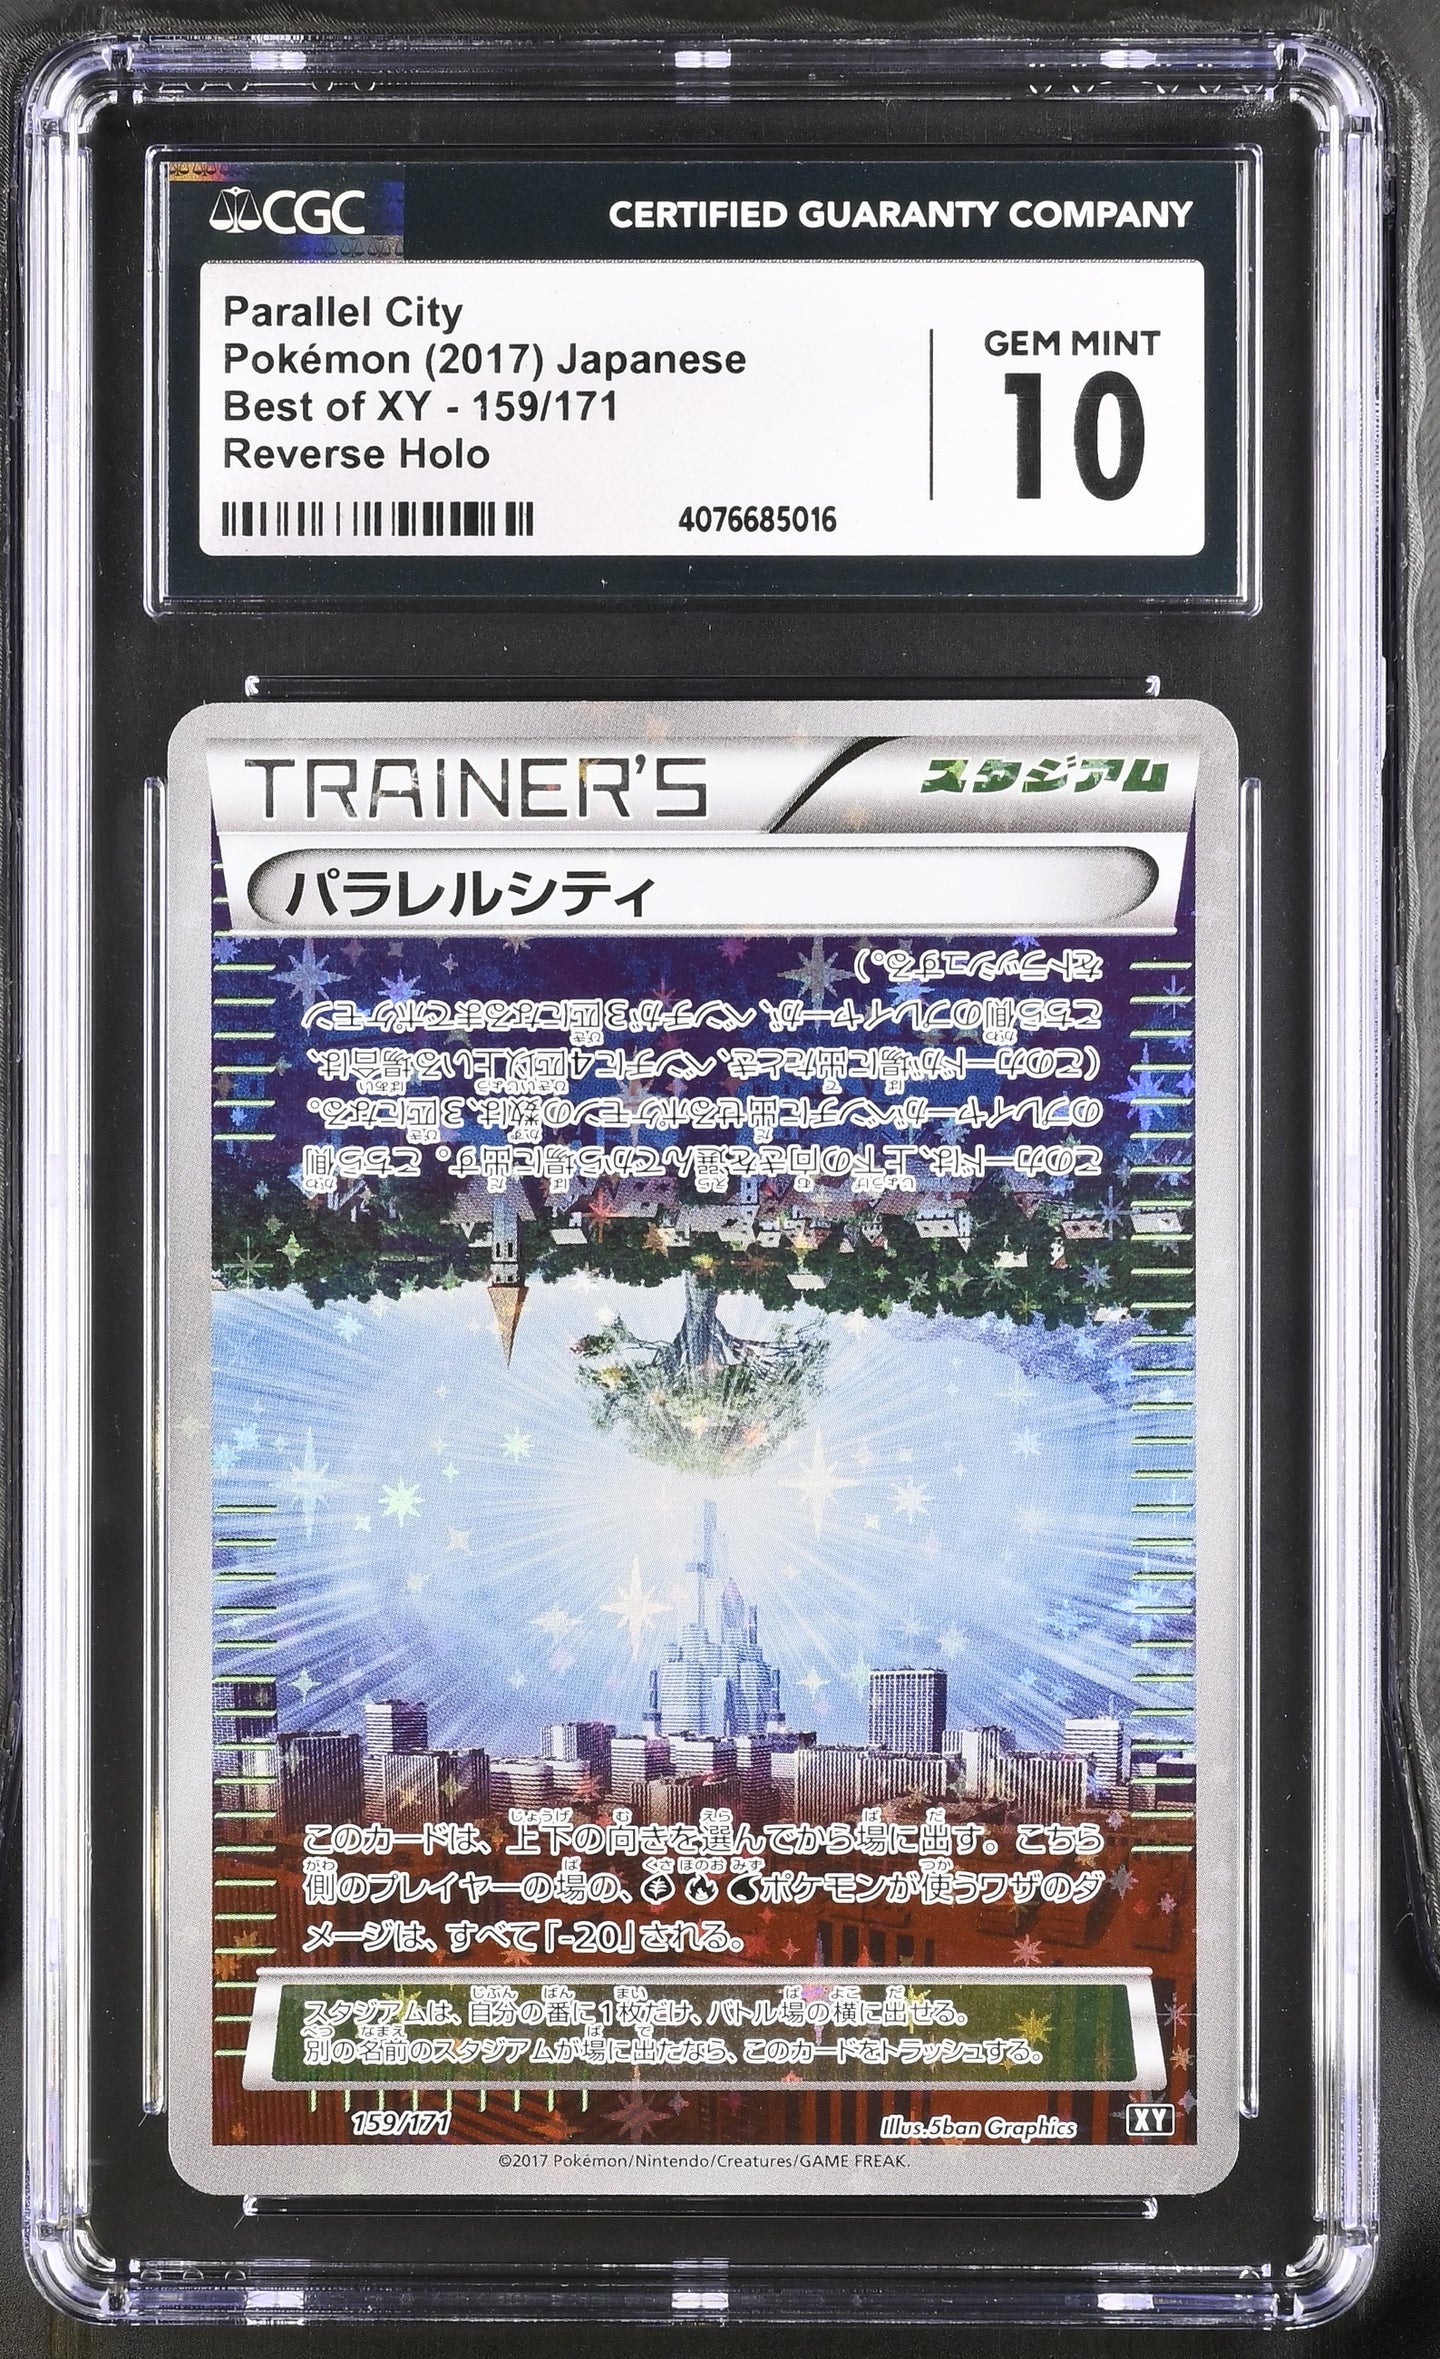 CGC GEM 10 Japanese Parallel City Sparkle Reverse Holo (Graded Card)